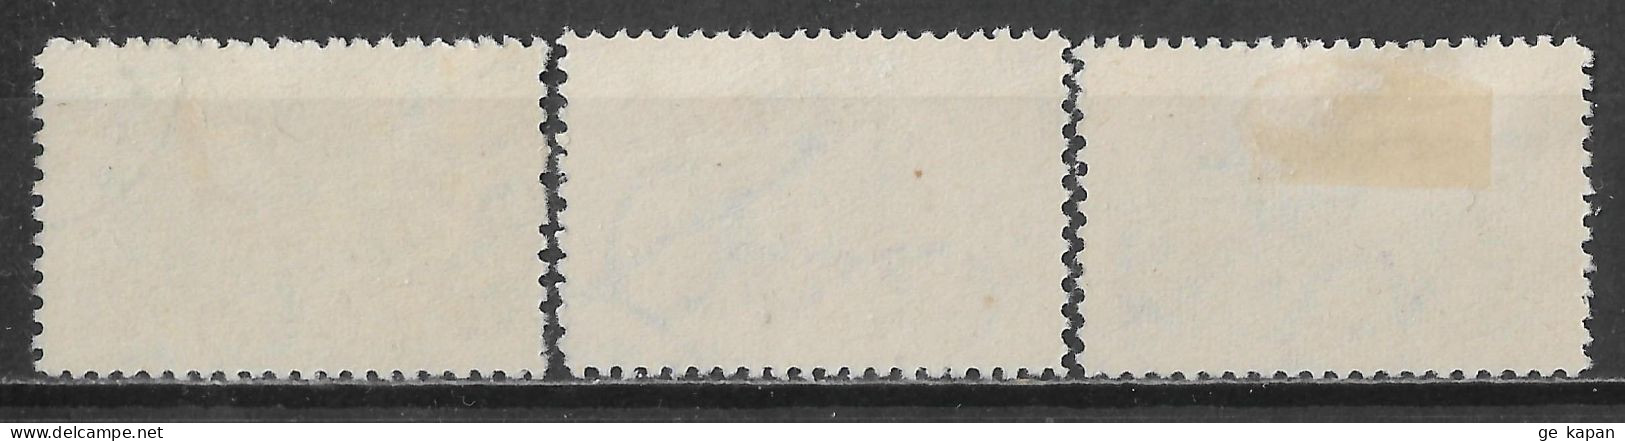 1963 CUBA SET OF 3 USED STAMPS (Michel # 853,854,858) CV €1.70 - Usados